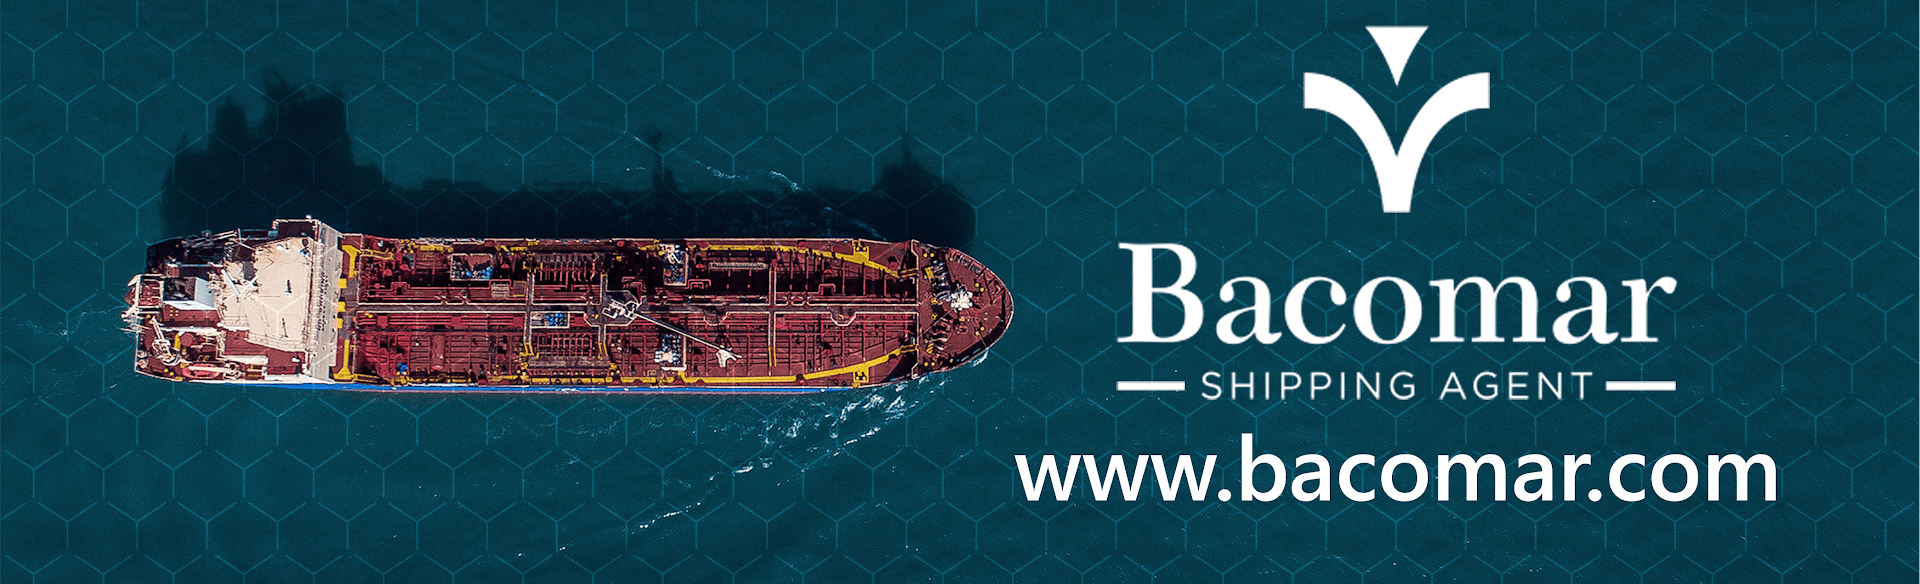 Bacomar Ceuta - Shipping Agent -